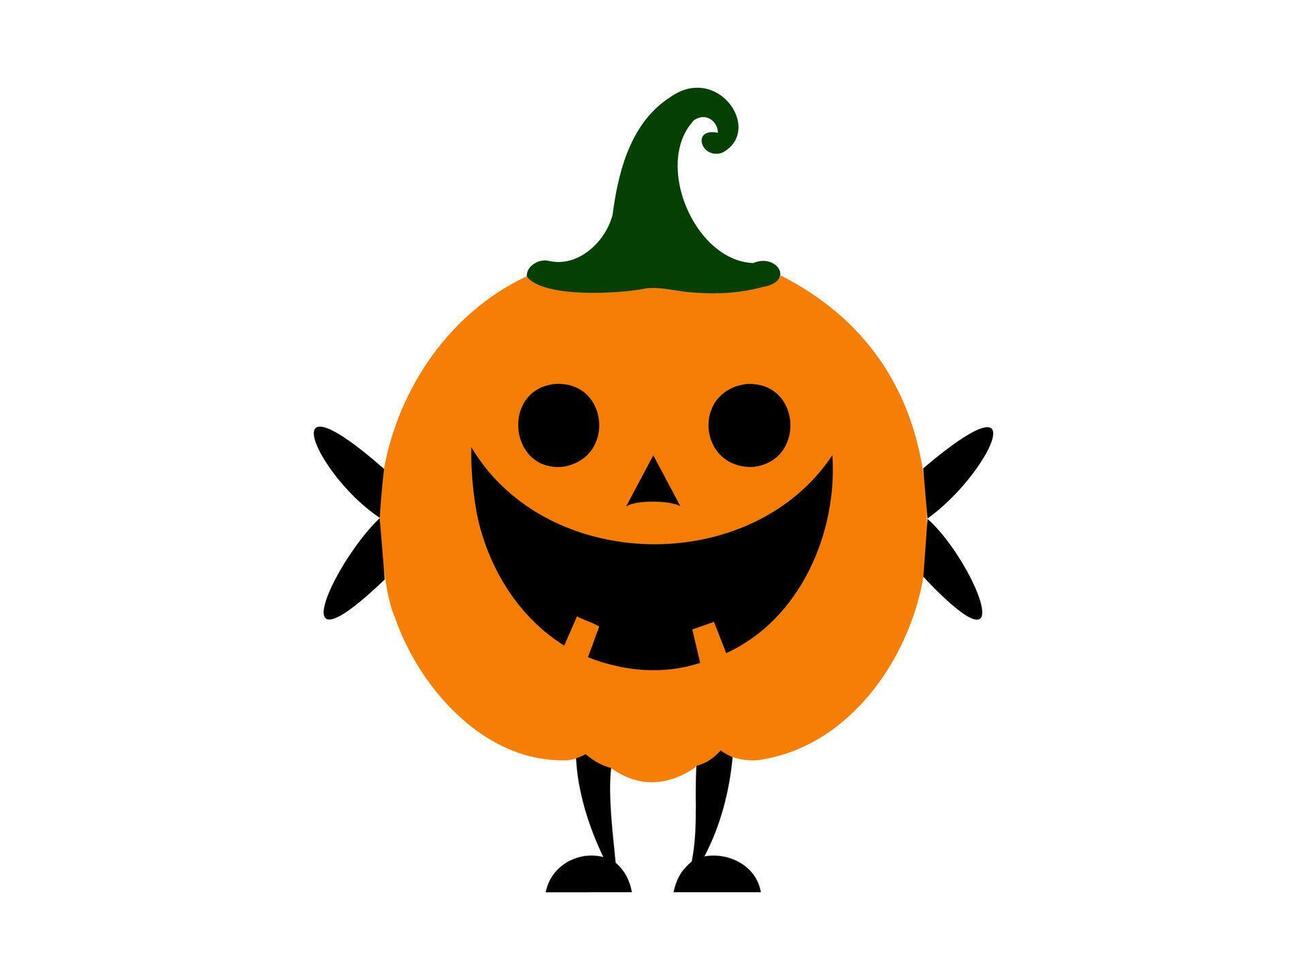 Smiling carved pumpkin character. Friendly cartoon jack-o-lantern. Illustration isolated on white backdrop. Concept of Halloween, kid-friendly decor, festive spirit, and joyful celebration vector